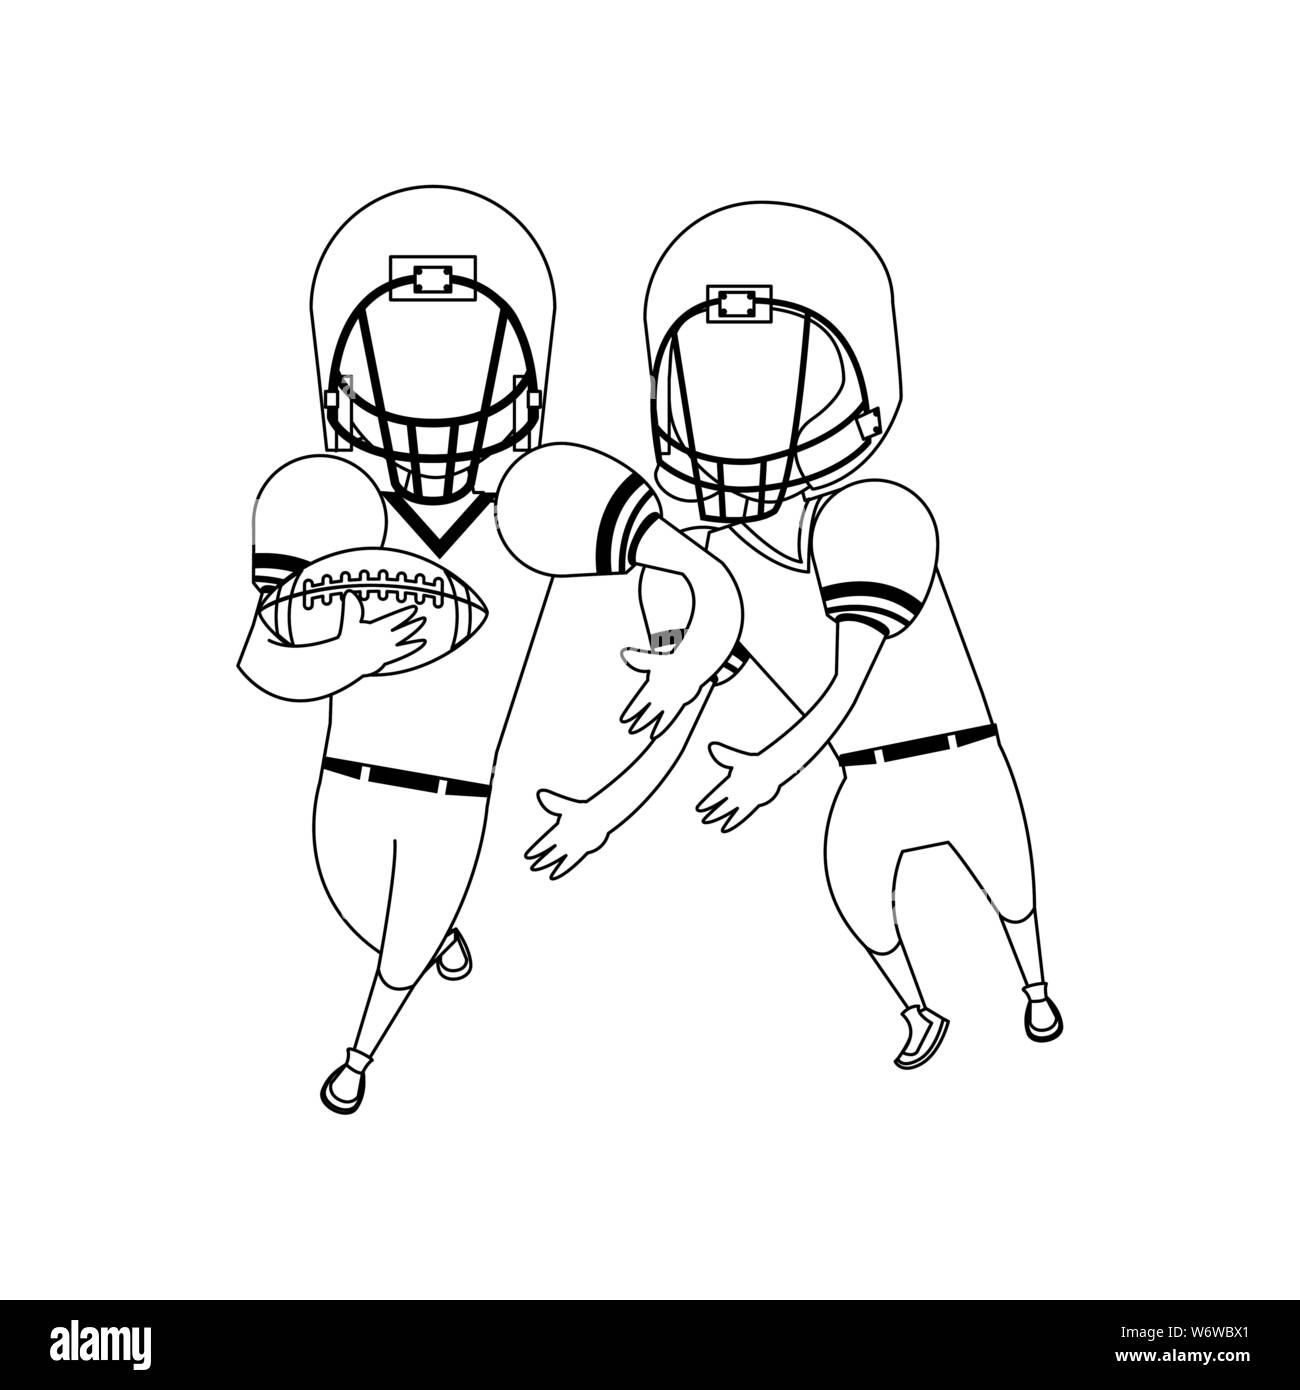 Jeu de sport football américain cartoon en noir et blanc Illustration de Vecteur